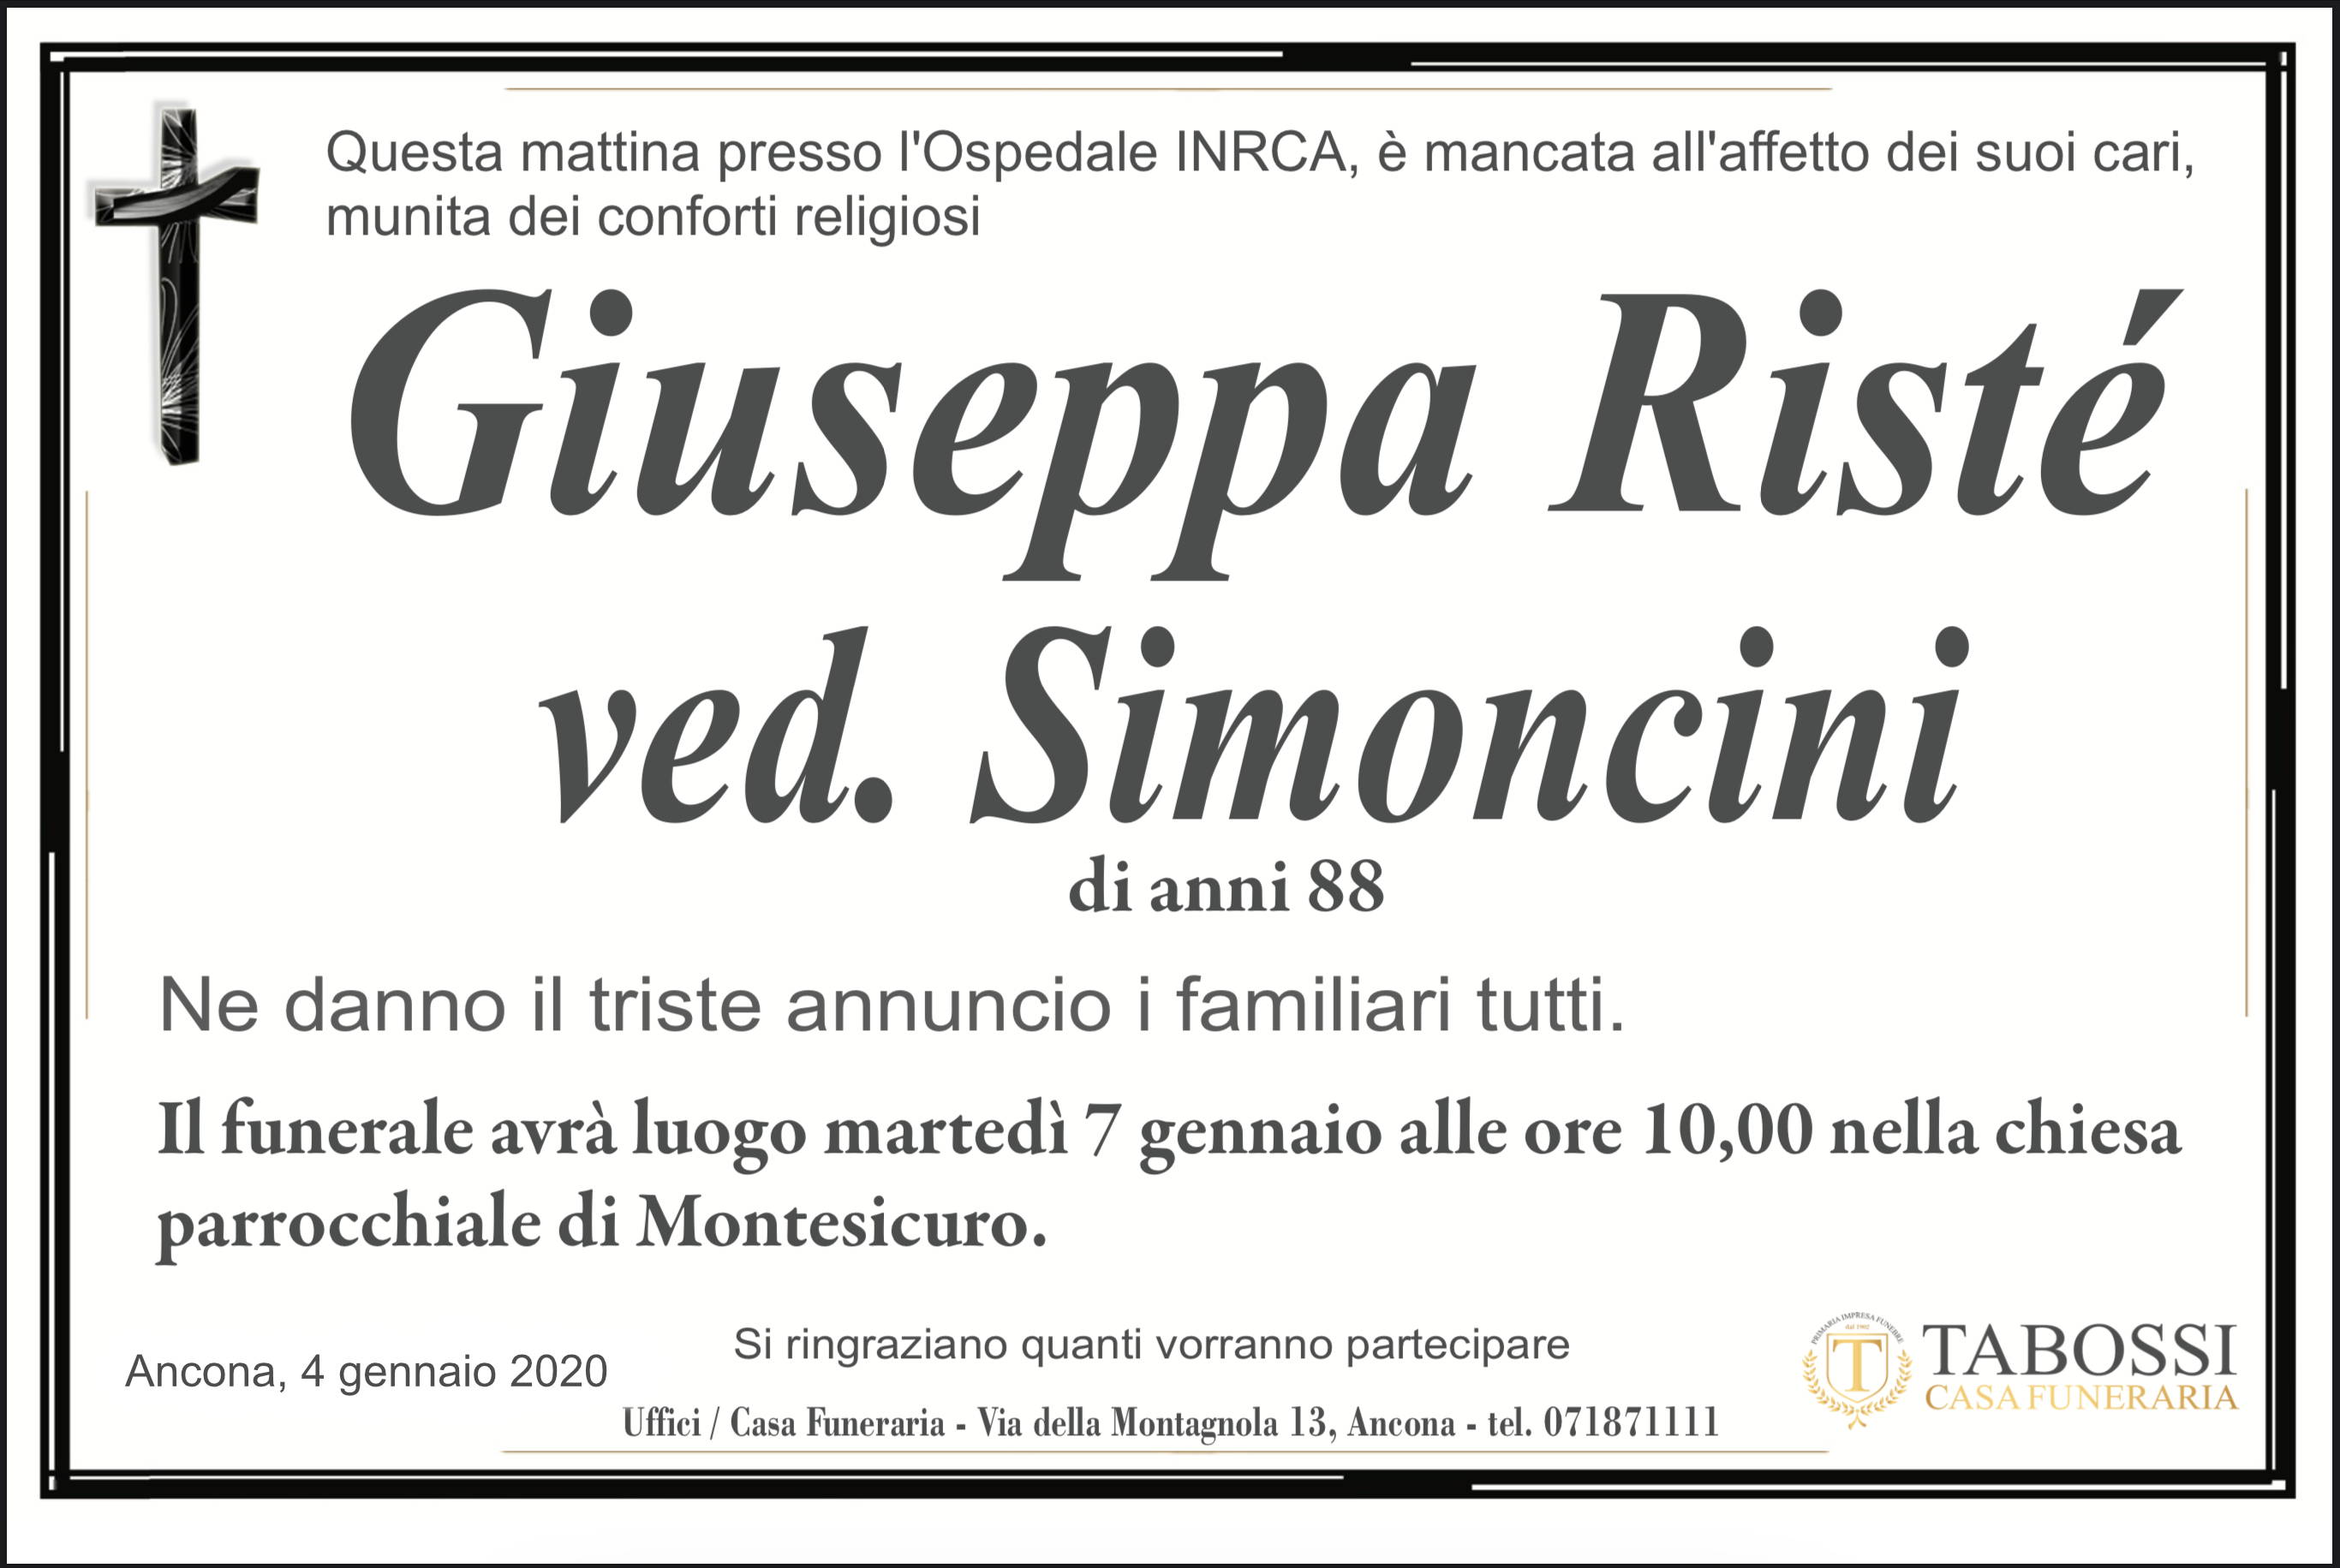 Giuseppa Risté ved. Simoncini